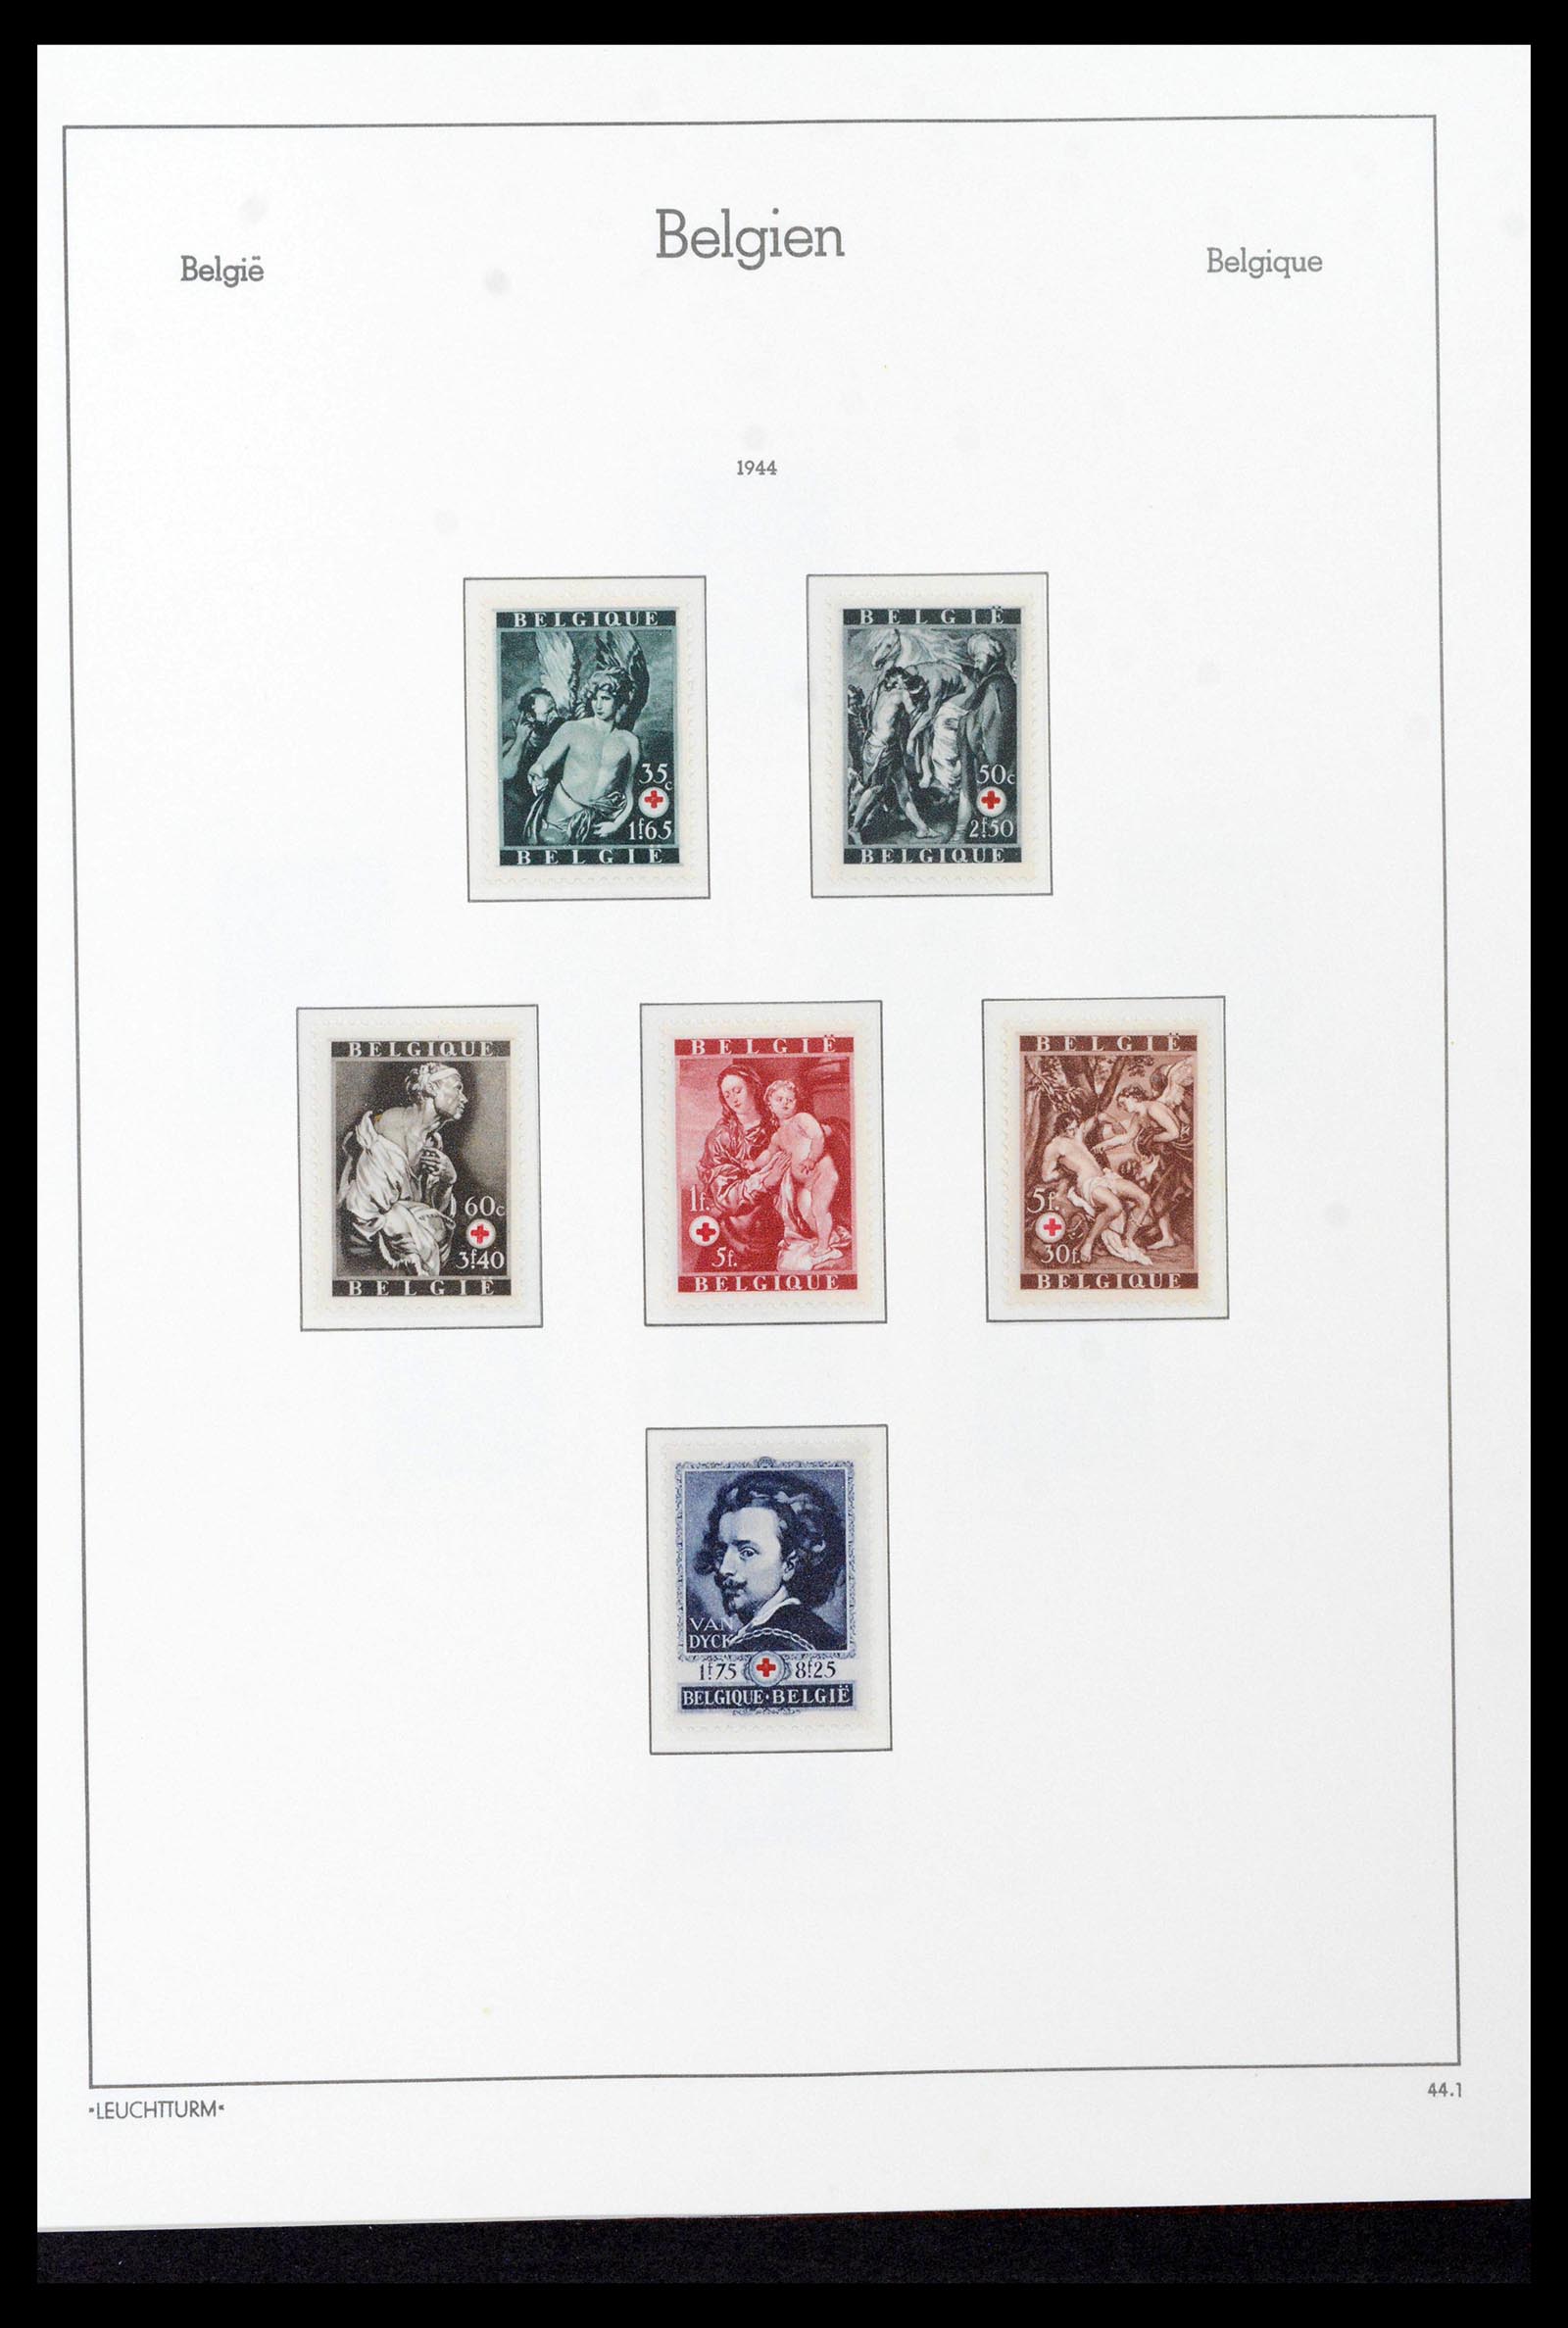 39137 0097 - Stamp collection 39137 Belgium 1849-2002.